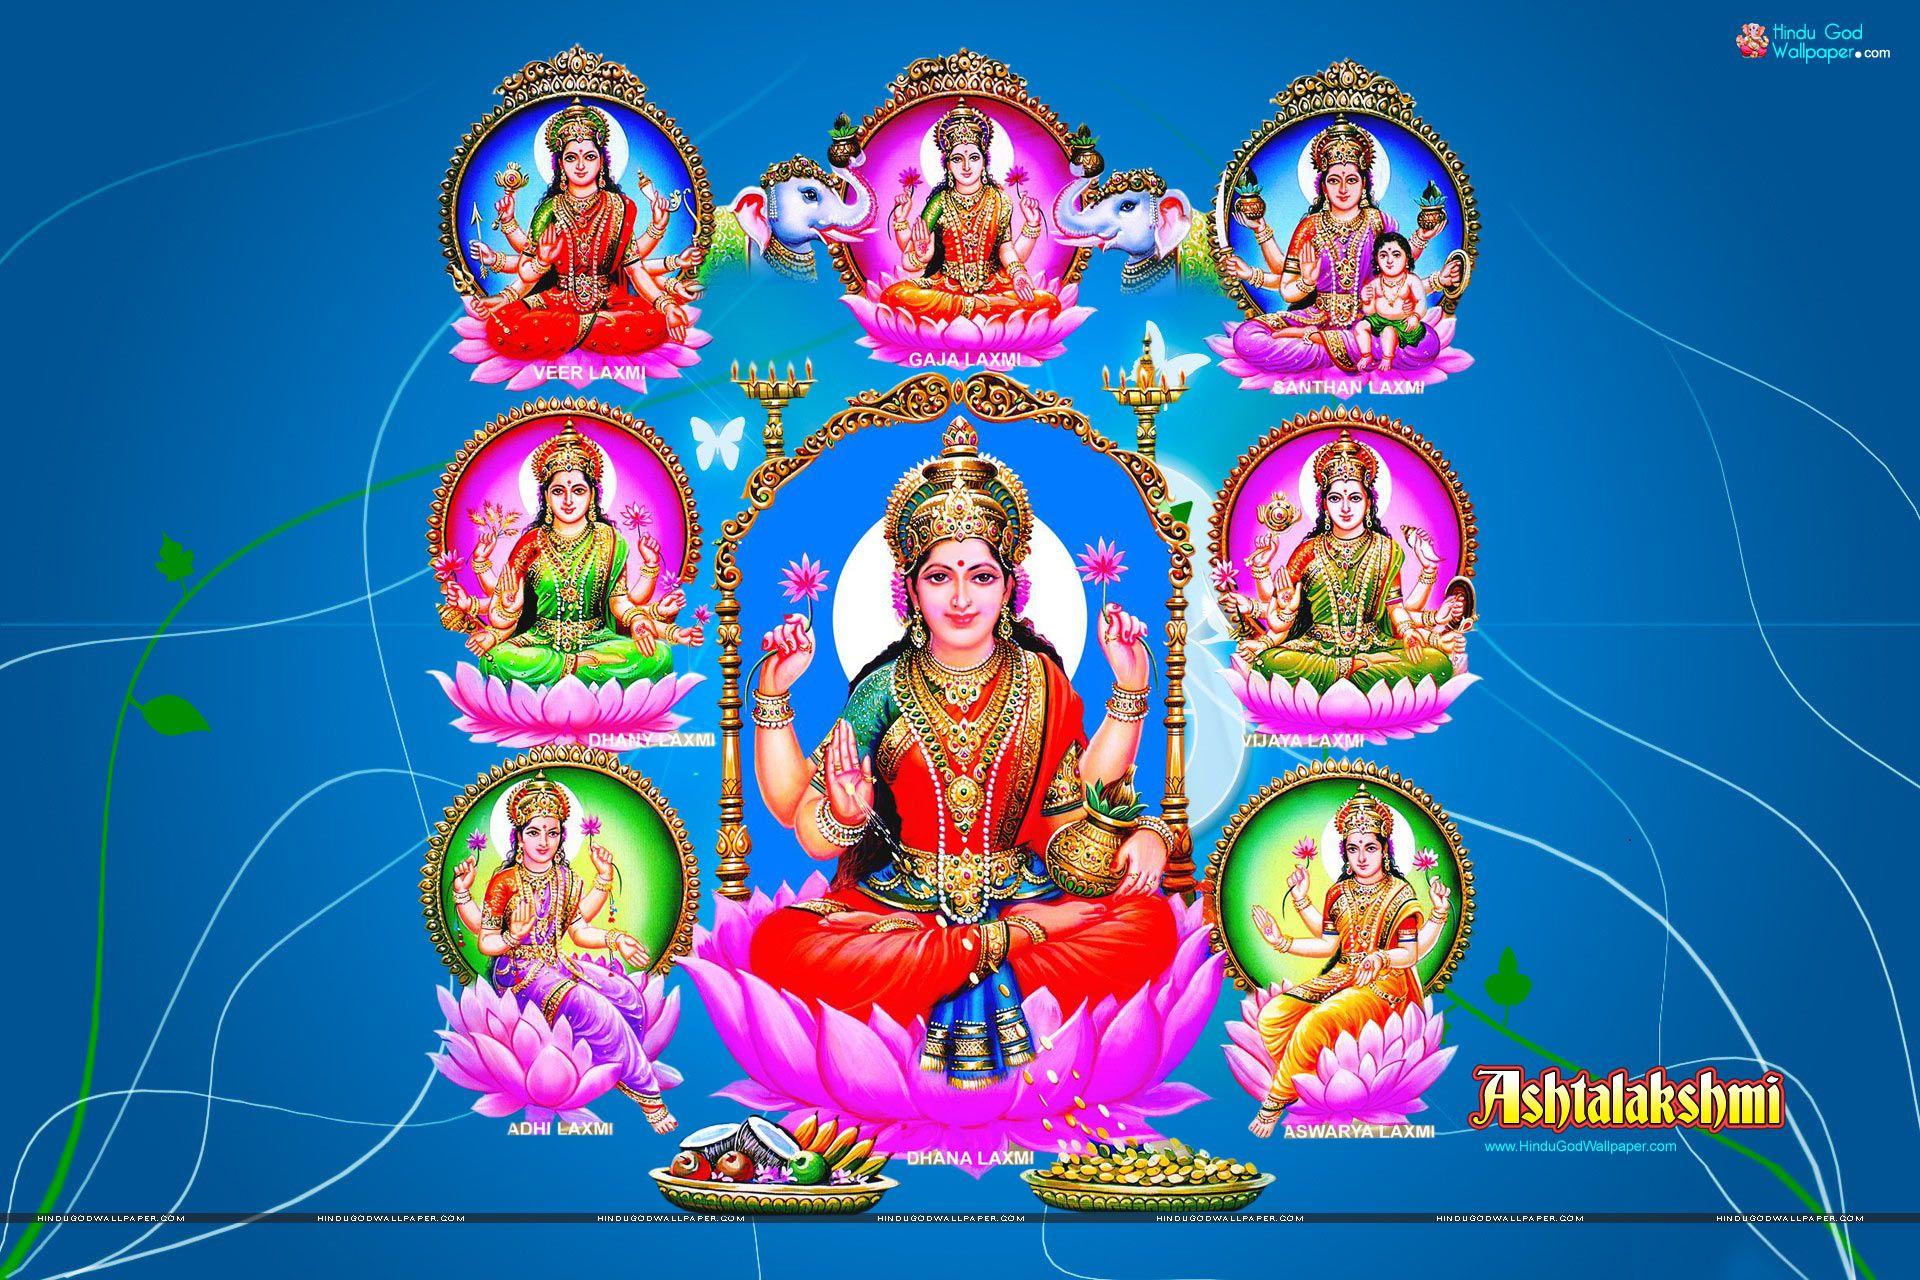 Goddess Ashta Lakshmi Wallpaper Free Download. Lakshmi image, Wallpaper free download, HD wallpaper 1080p